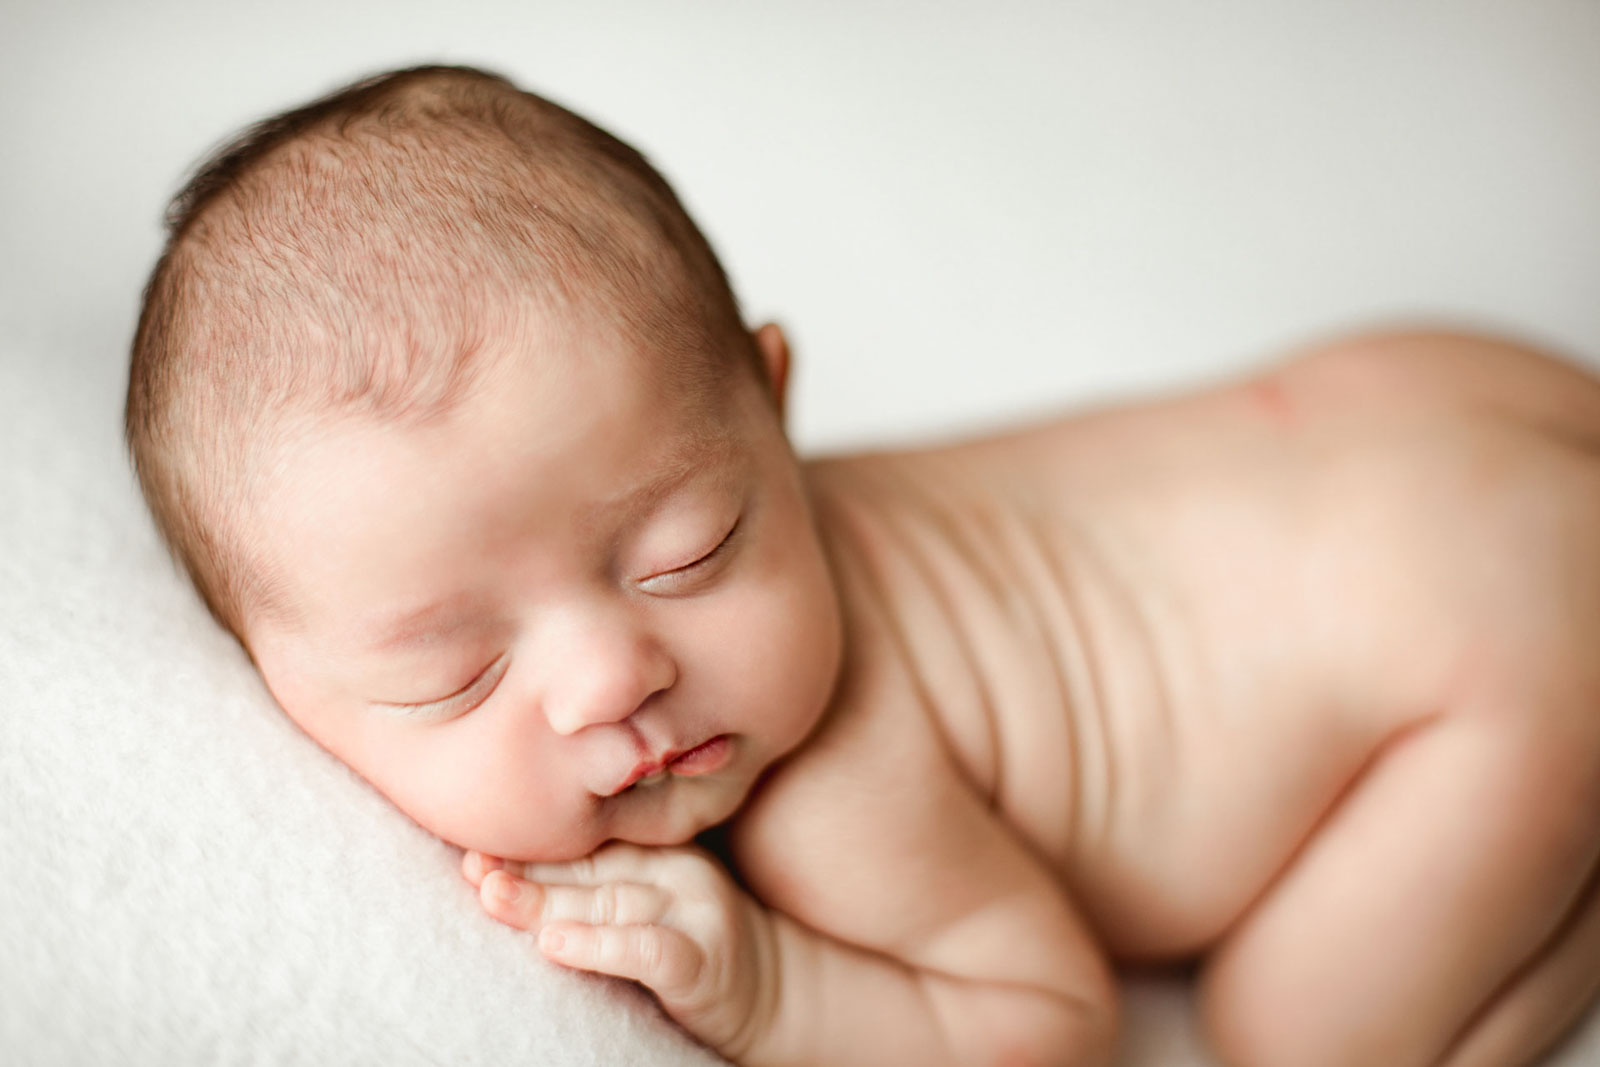 newborn baby posed on cream white background. sleepy baby with hand under cheek.